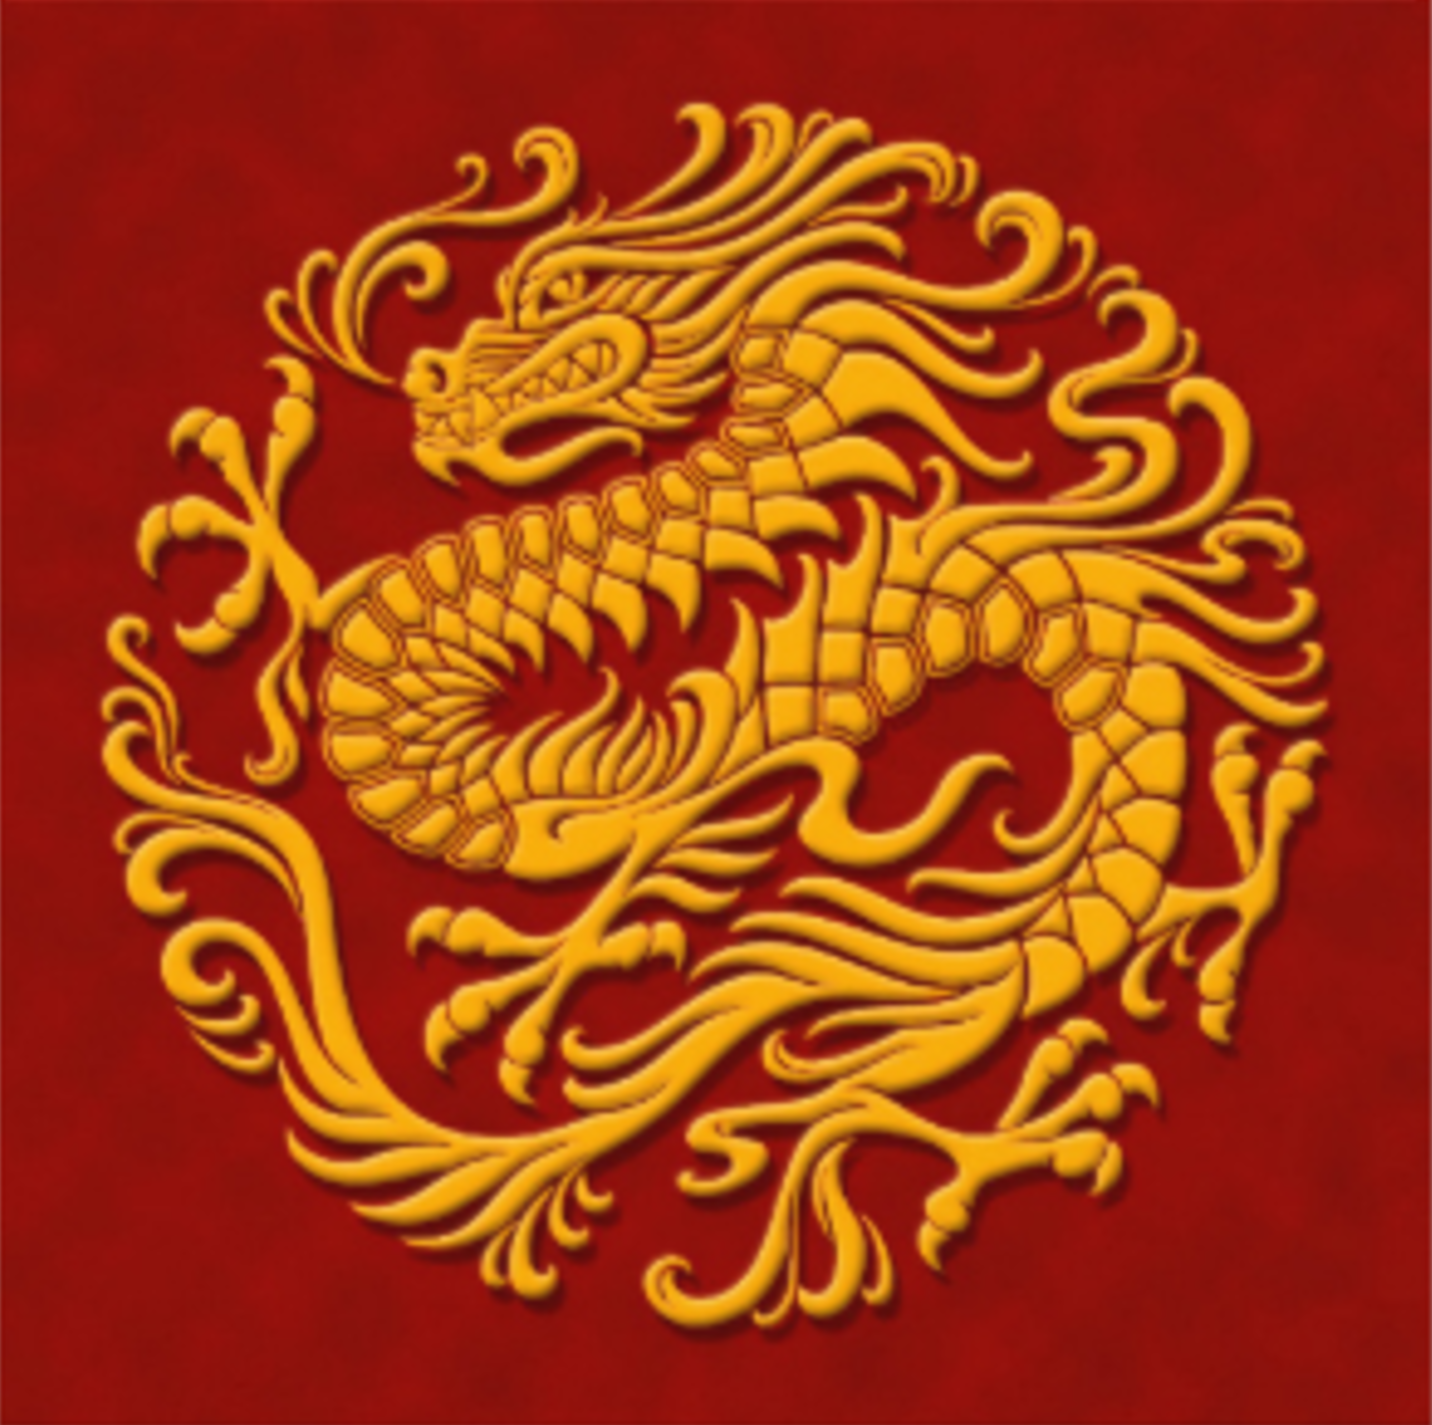 Asia dragon. Zolotoy Drakon/золотой дракон. Сюаньлун дракон. Китайский дракон Тяньлун. Китайский дракон красно золотой.